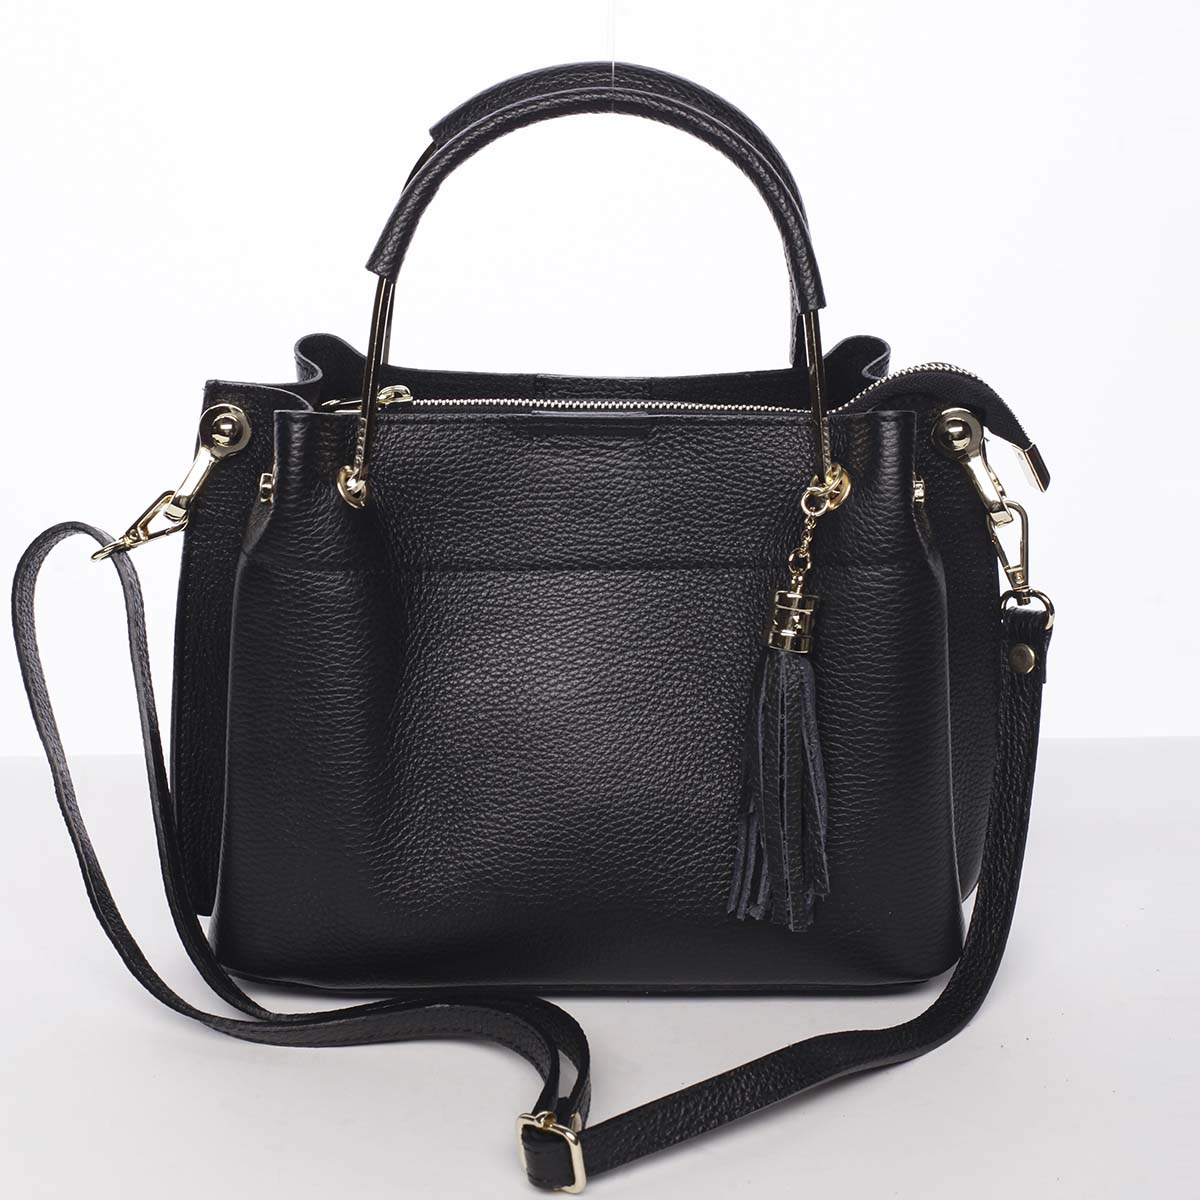 Exkluzívna dámska kožená kabelka čierna - ItalY Maarj